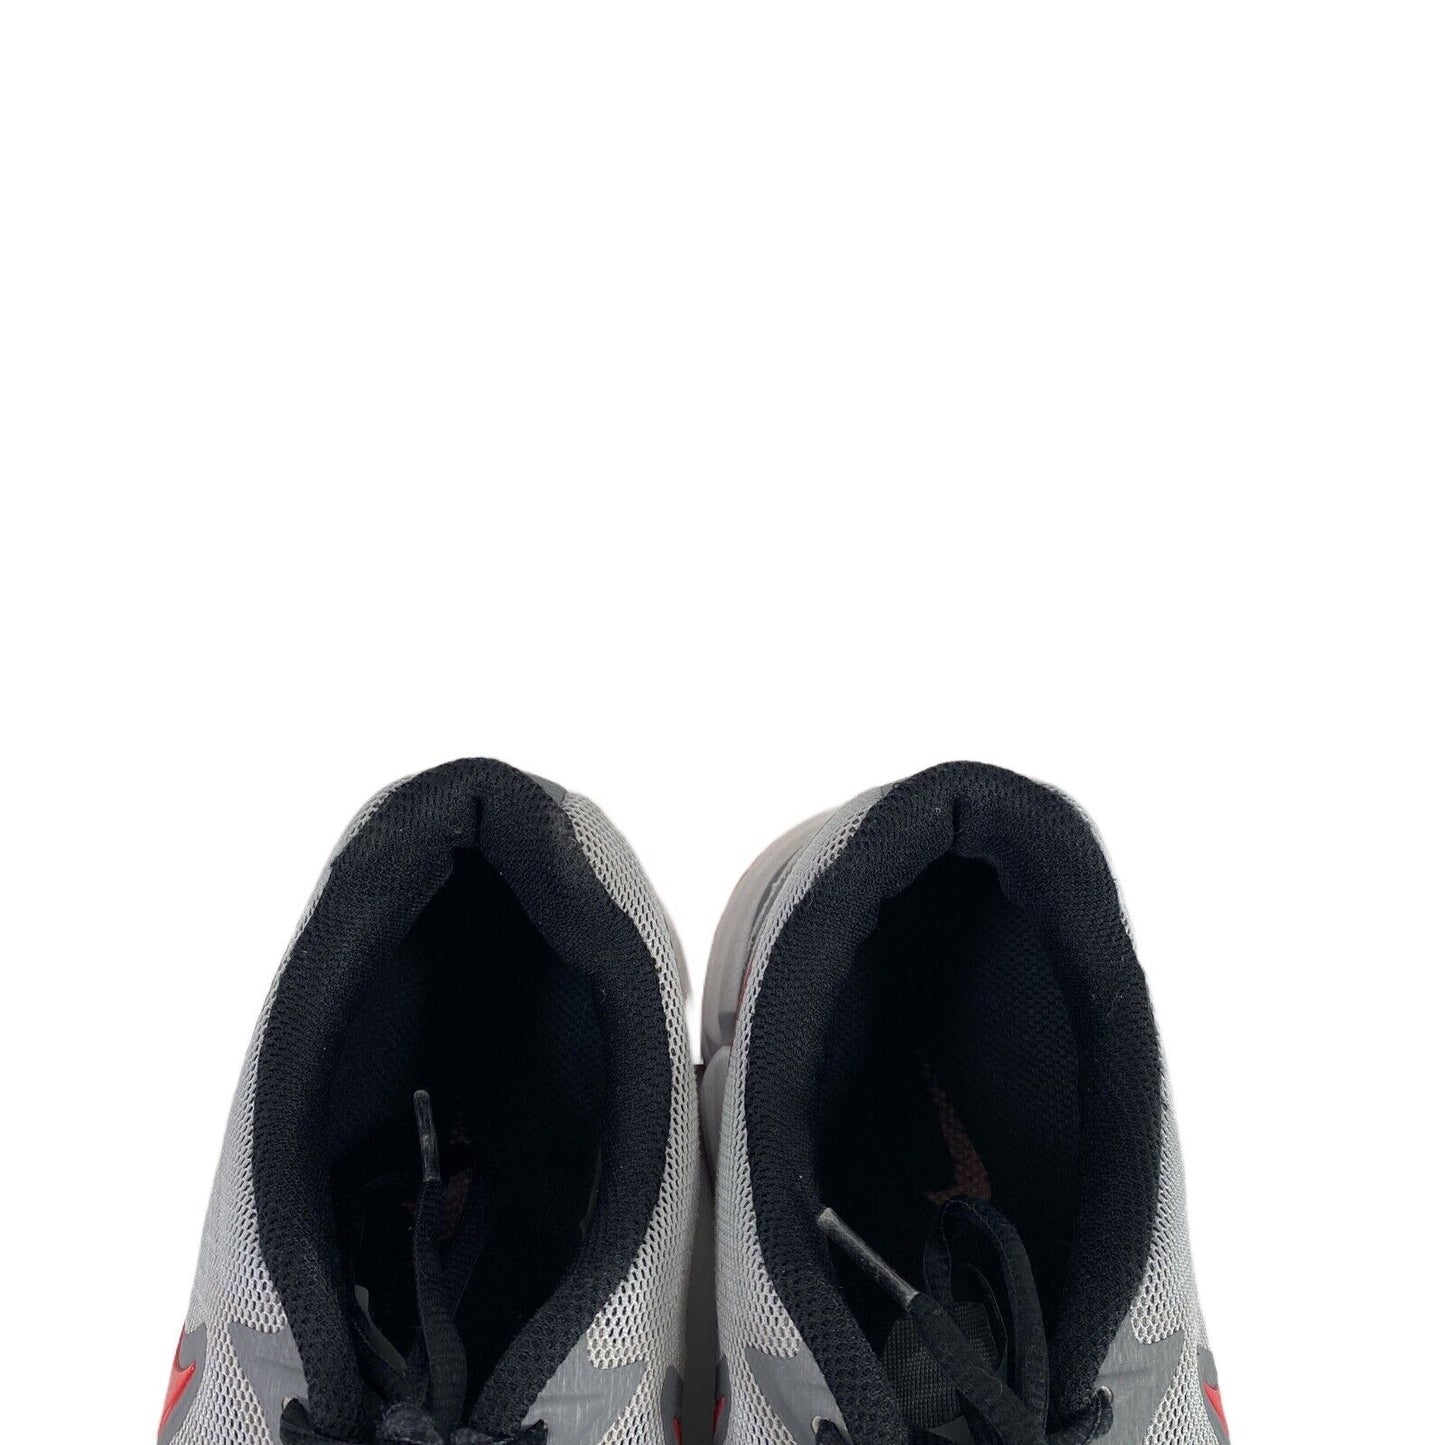 Nike Men's Gray/Red Dual Fusion Training Sneakers - 10